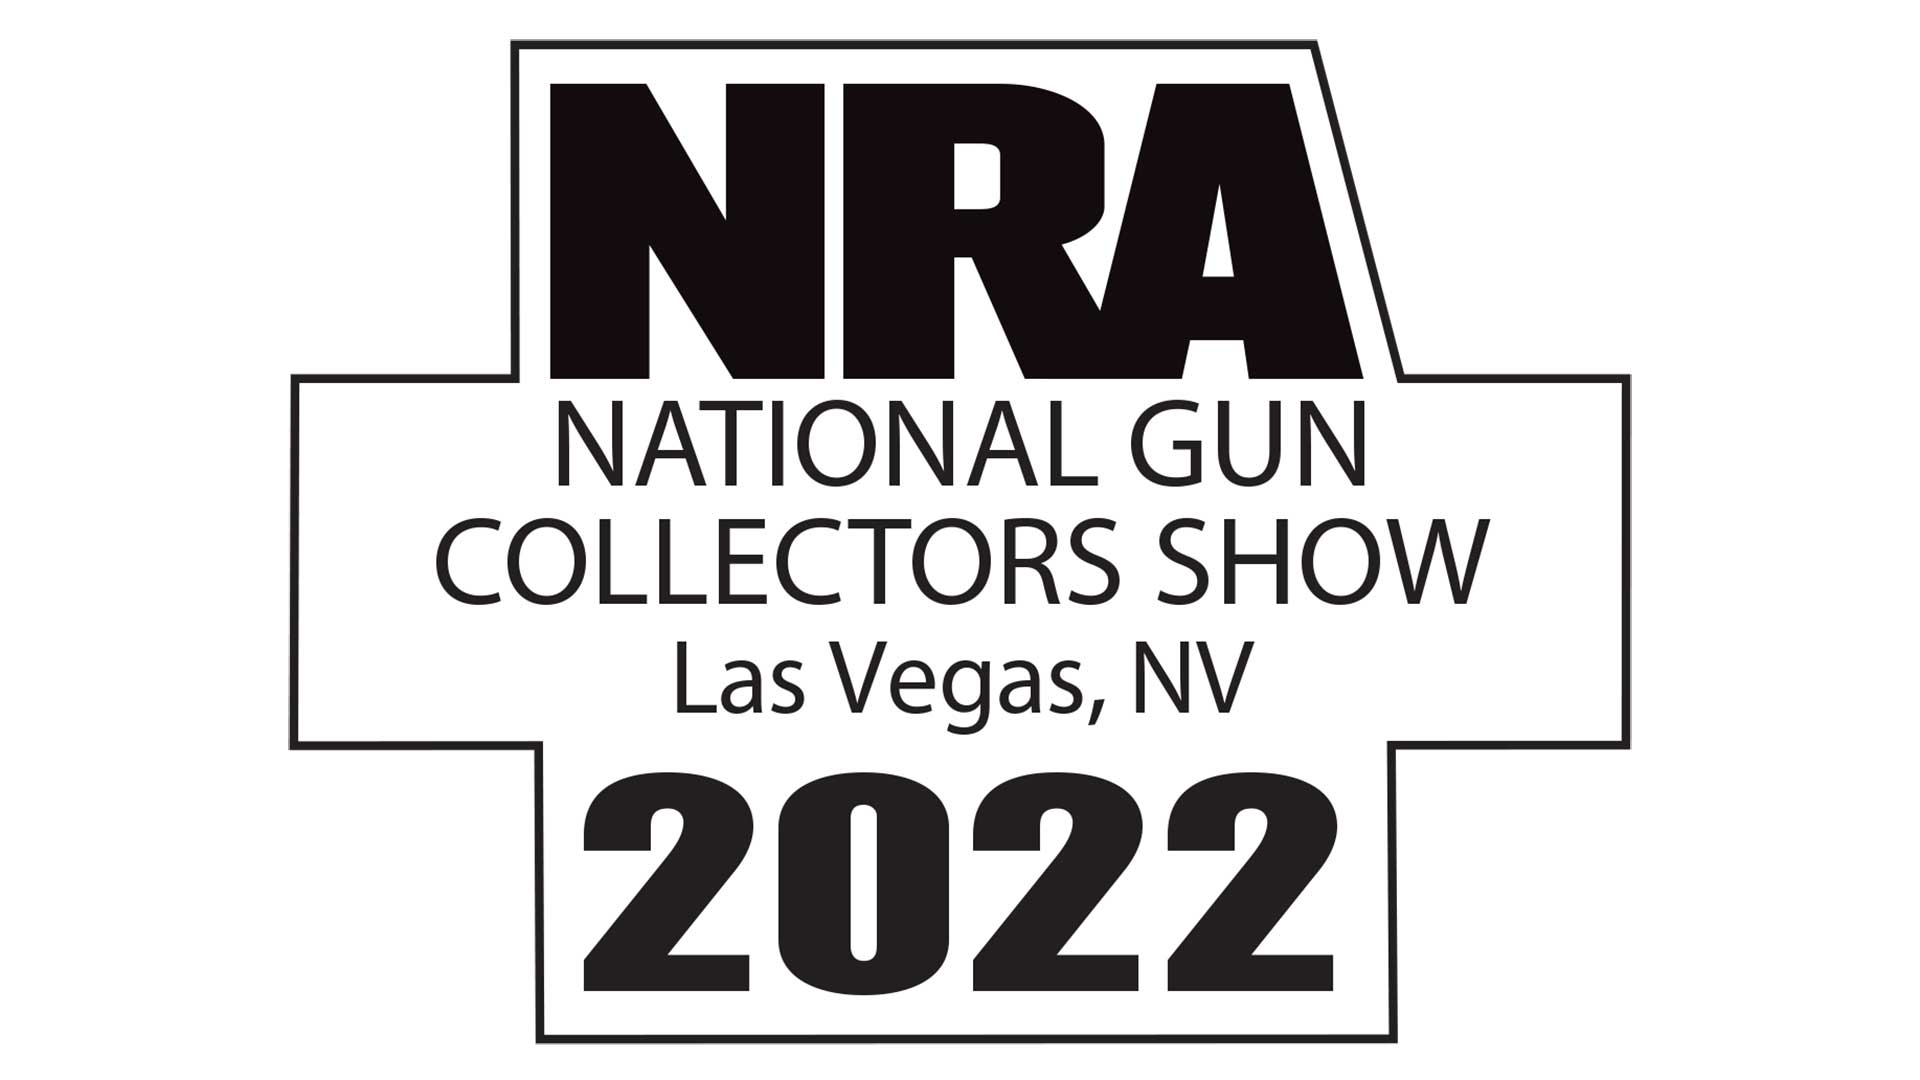 NRA's 2022 National Gun Collectors Show Returning To Las Vegas An